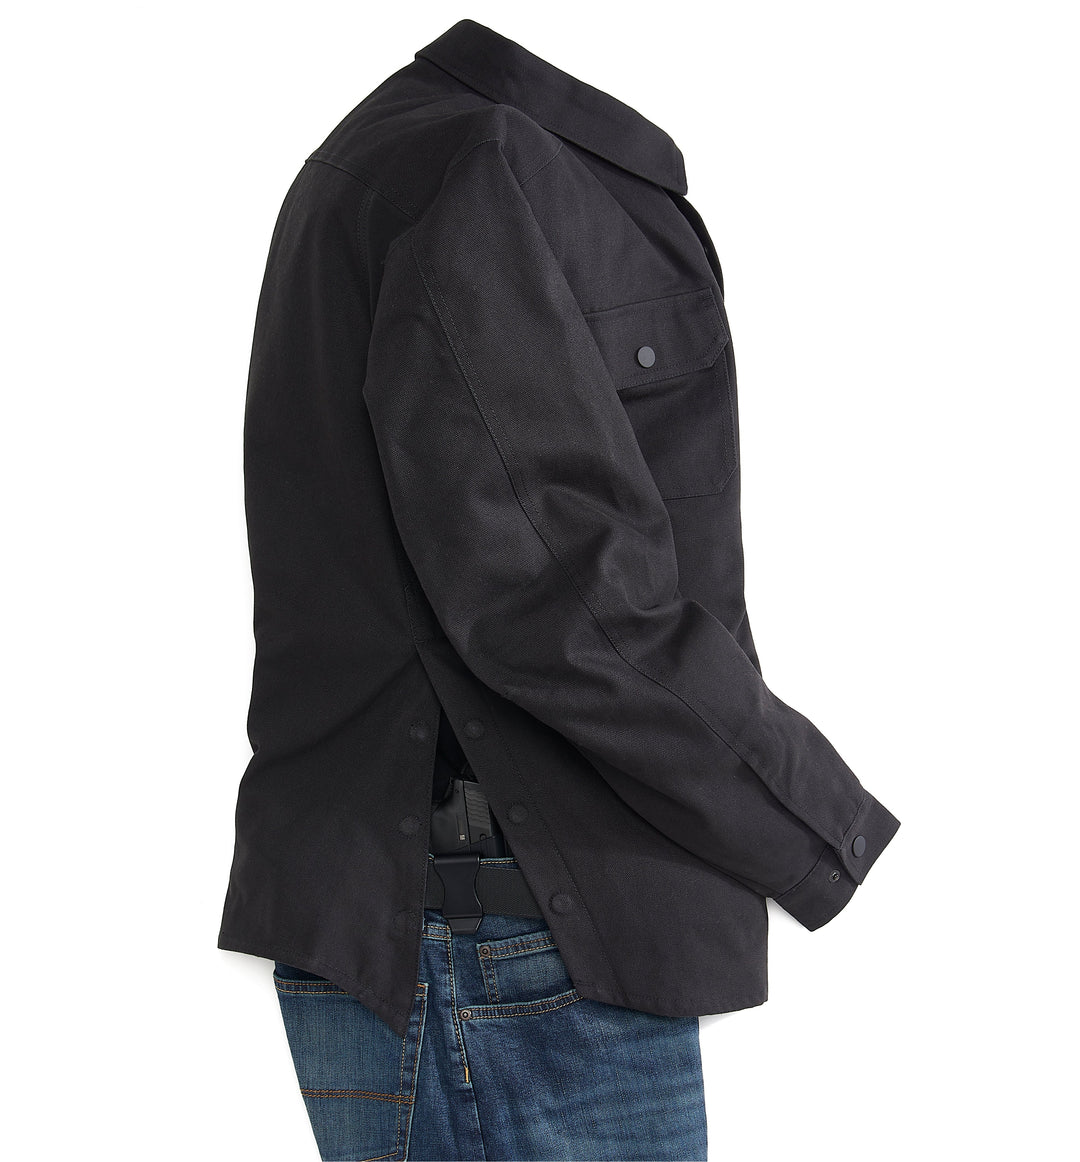 Venado Heavy Duty Quilt Lined Canvas Jacket for Men - Utility Pockets 